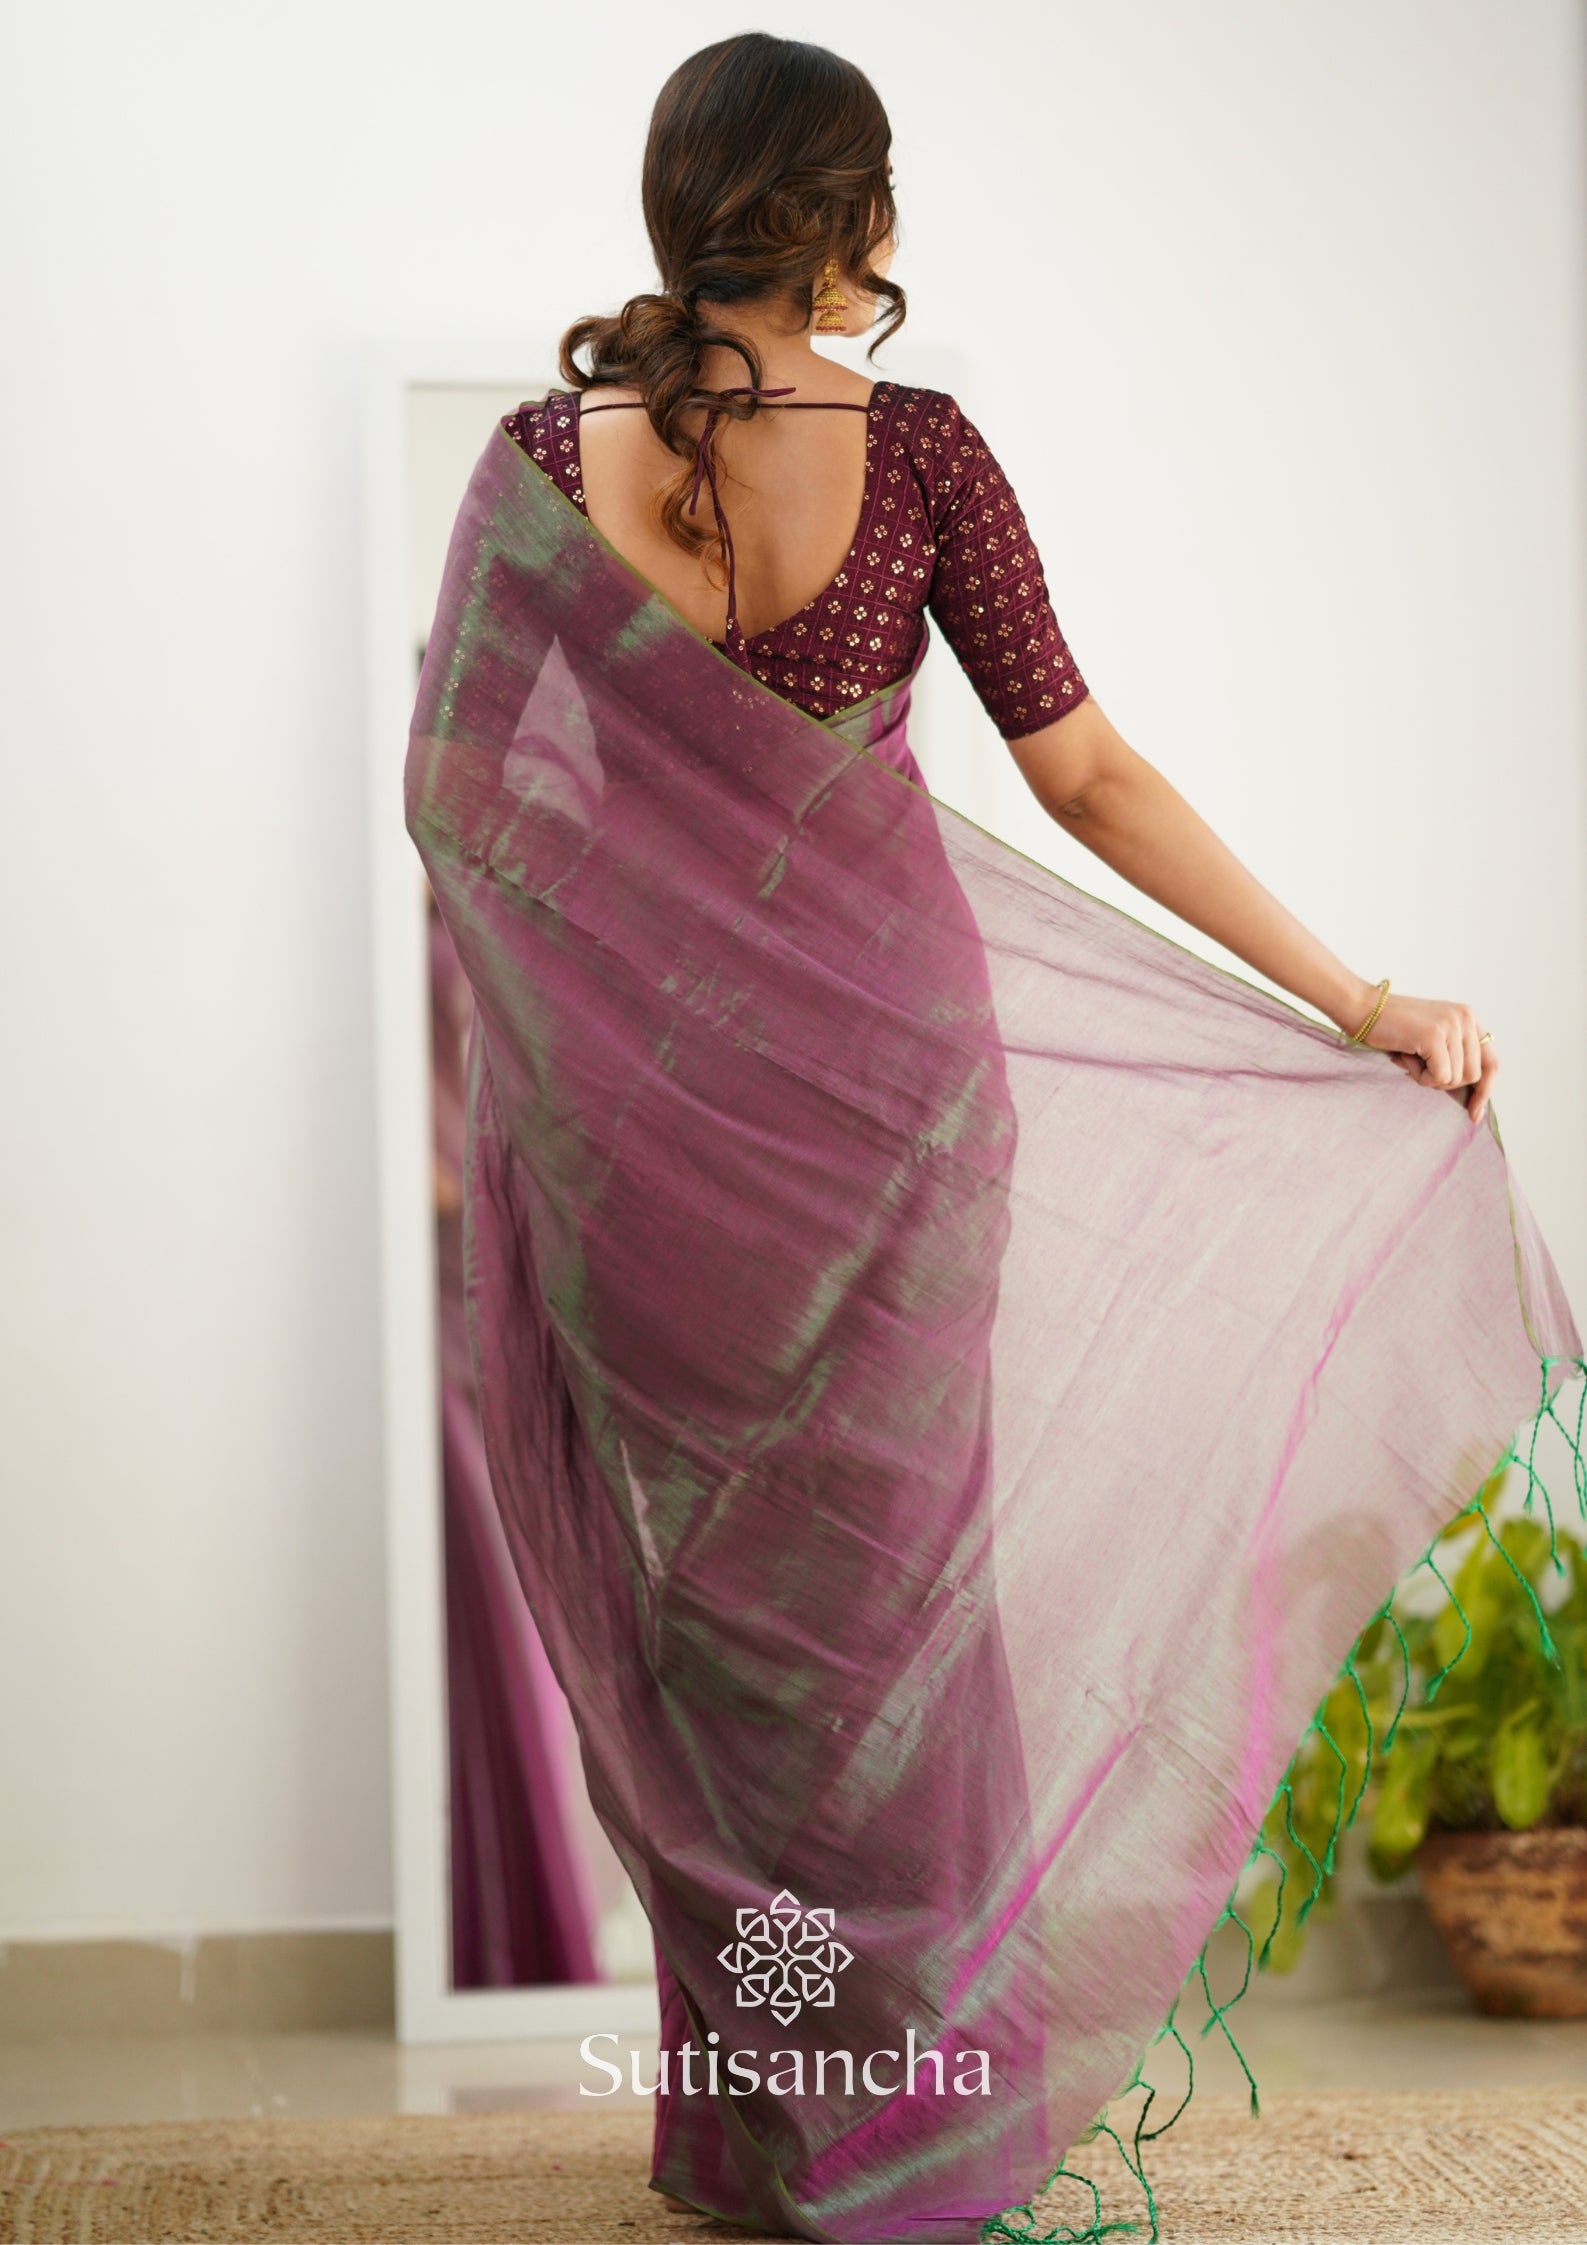 Sutisancha Onionpink Handloom Tissue Saree With Designer Blouse